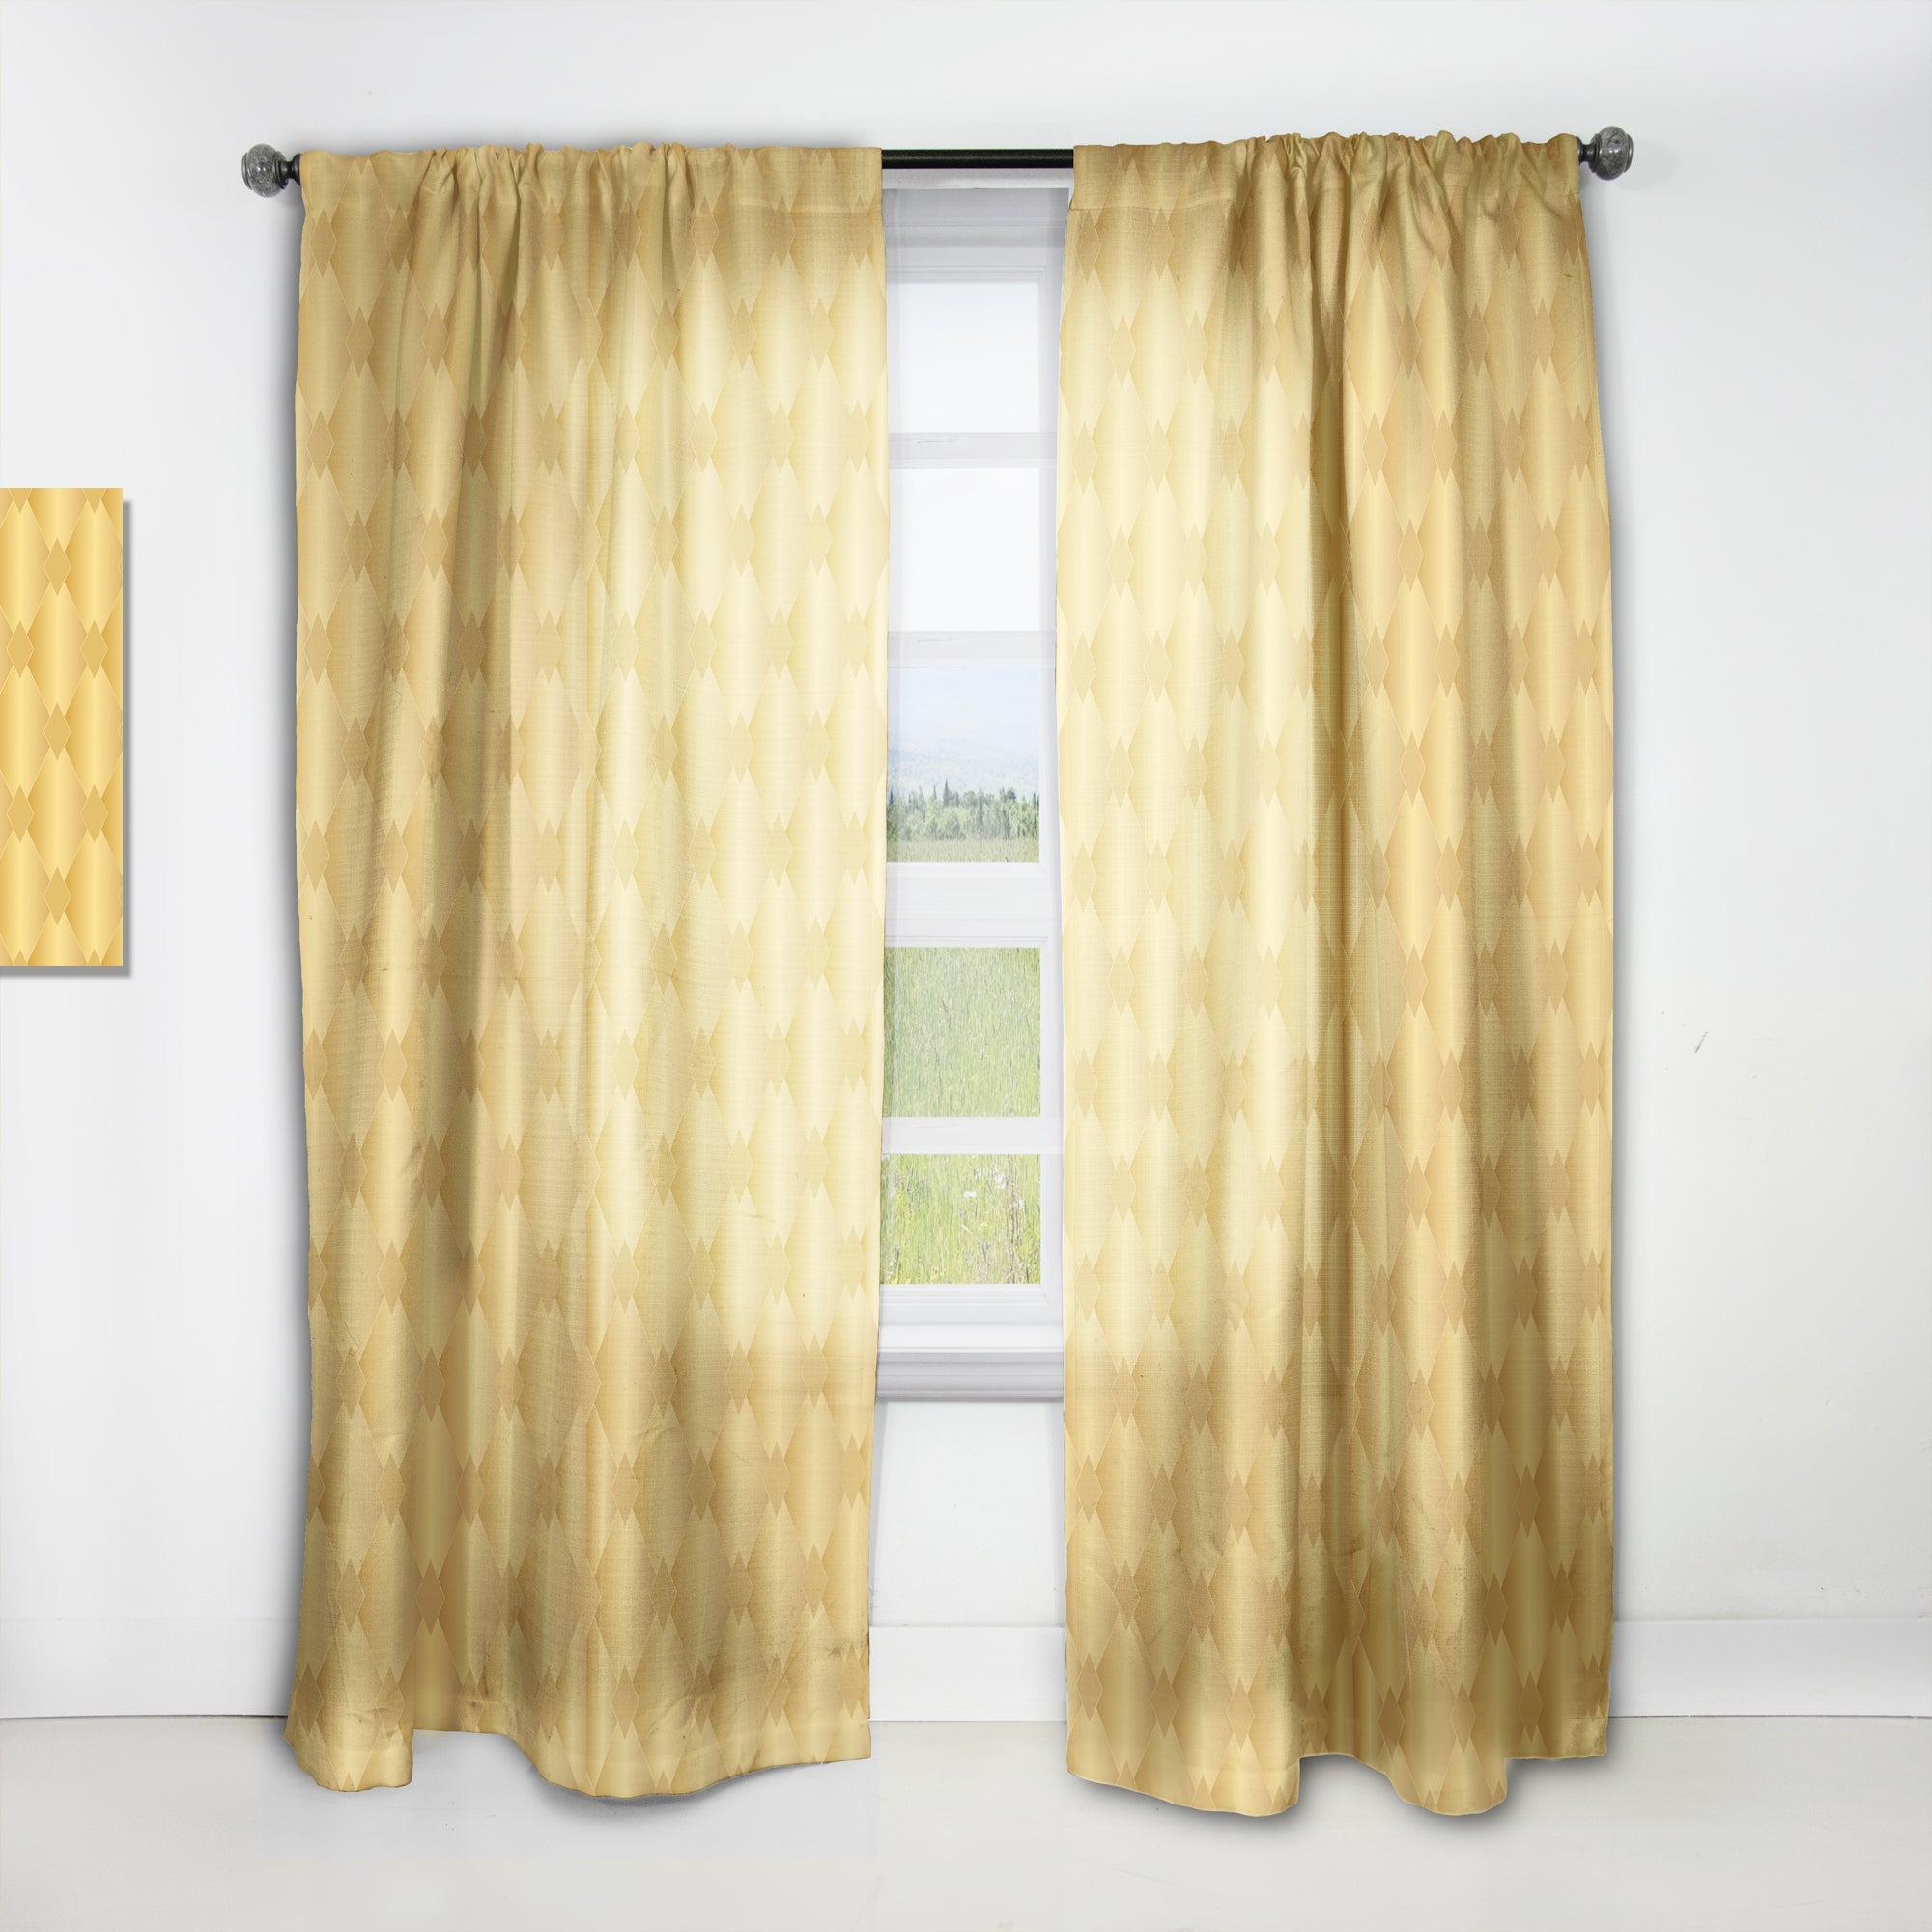 Designart 'Golden Geometric I' Mid-Century Modern Curtain Panel